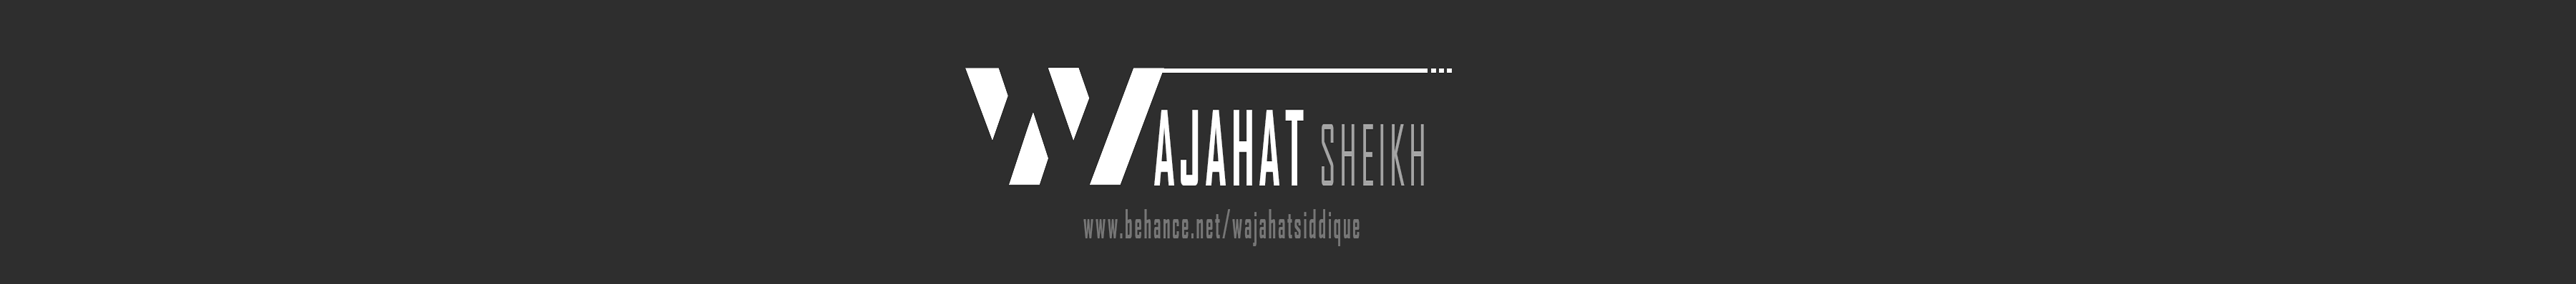 Wajahat Sheikh's profile banner